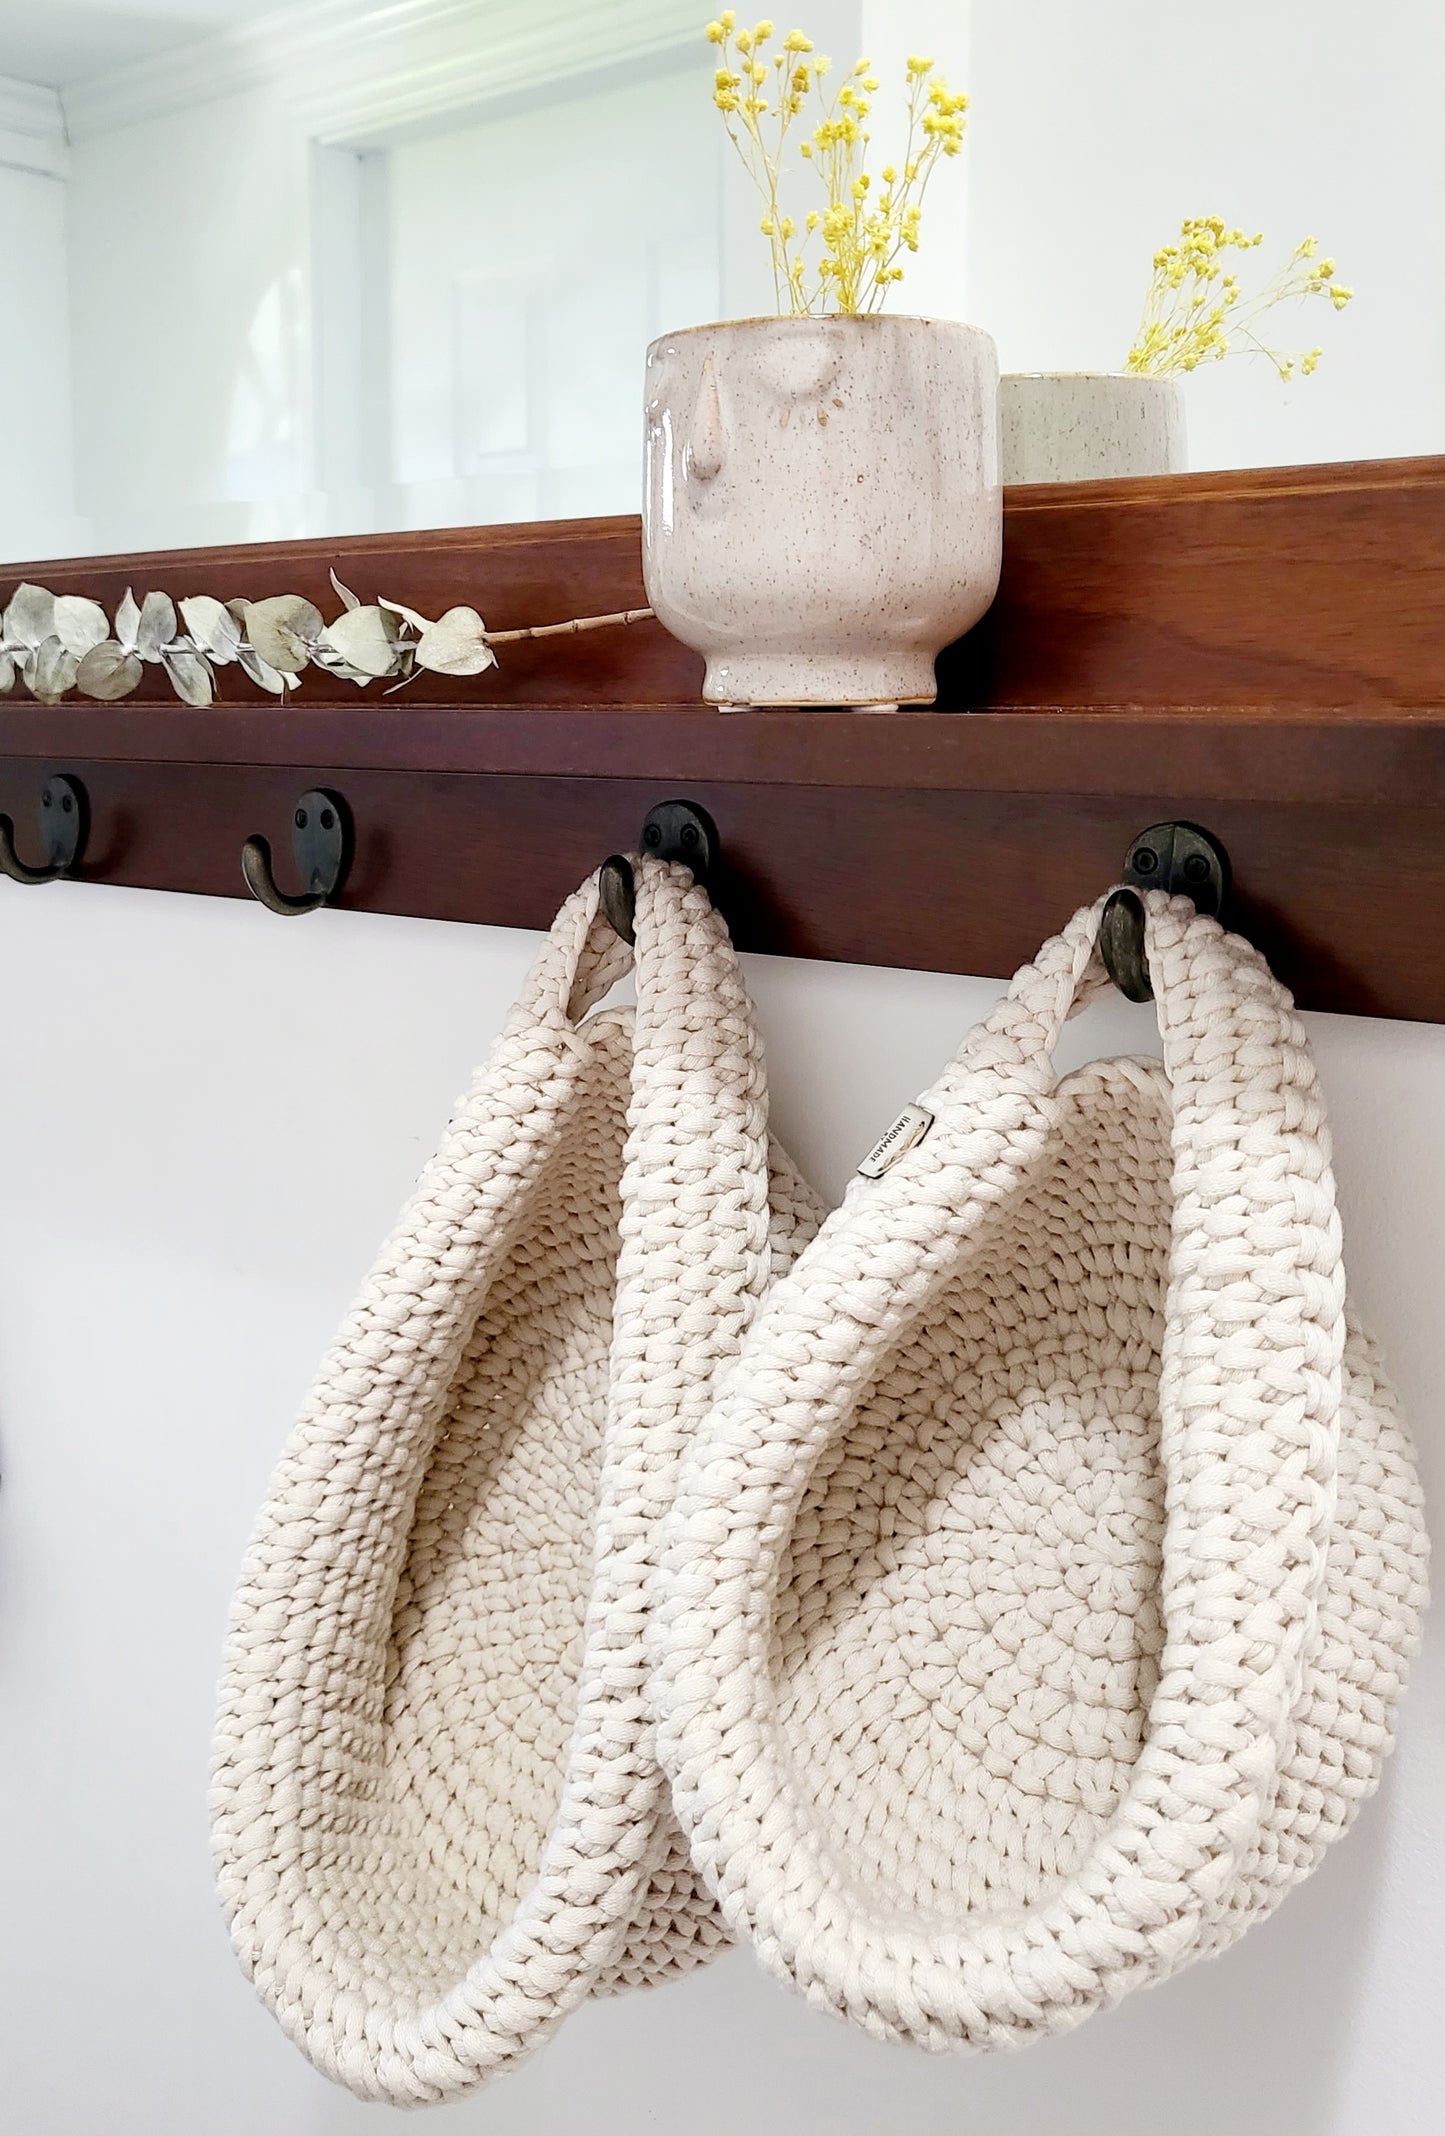 Crocheted Basket with Handle - Set of two Baskets - Hanging Storage Basket  – Basket Organizer